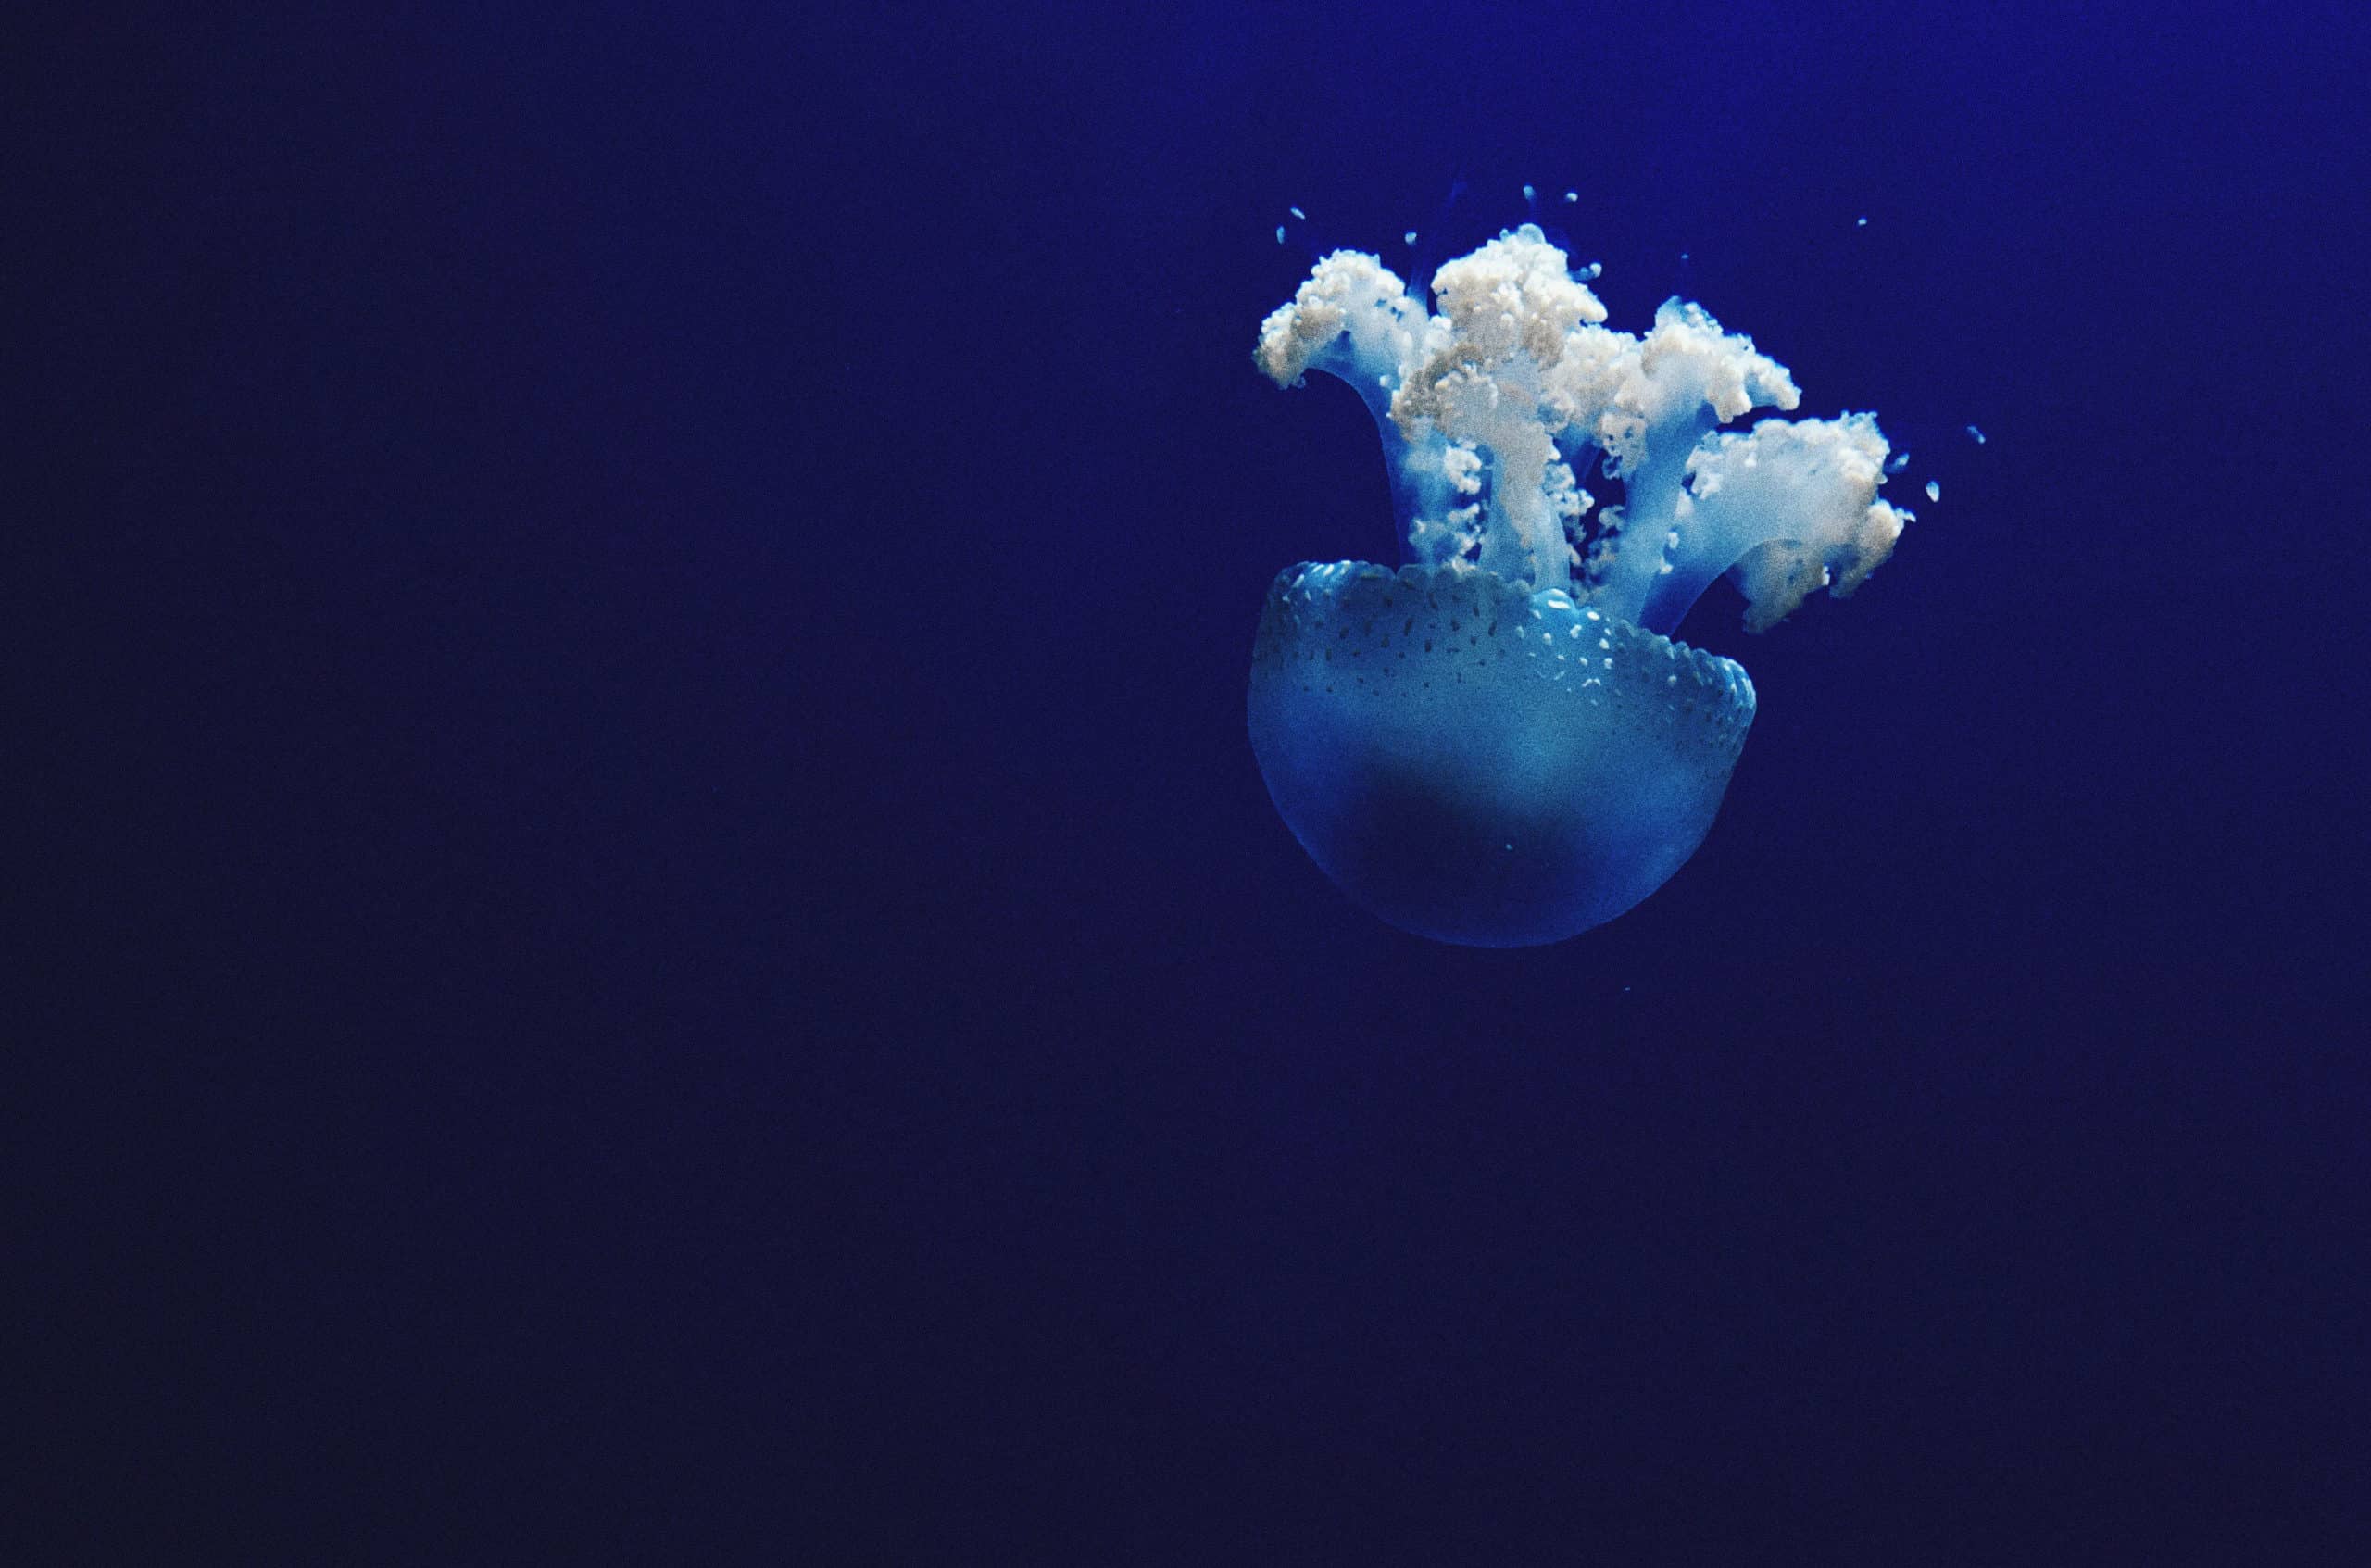 Big blue jellyfish lightens up in dark seawater.